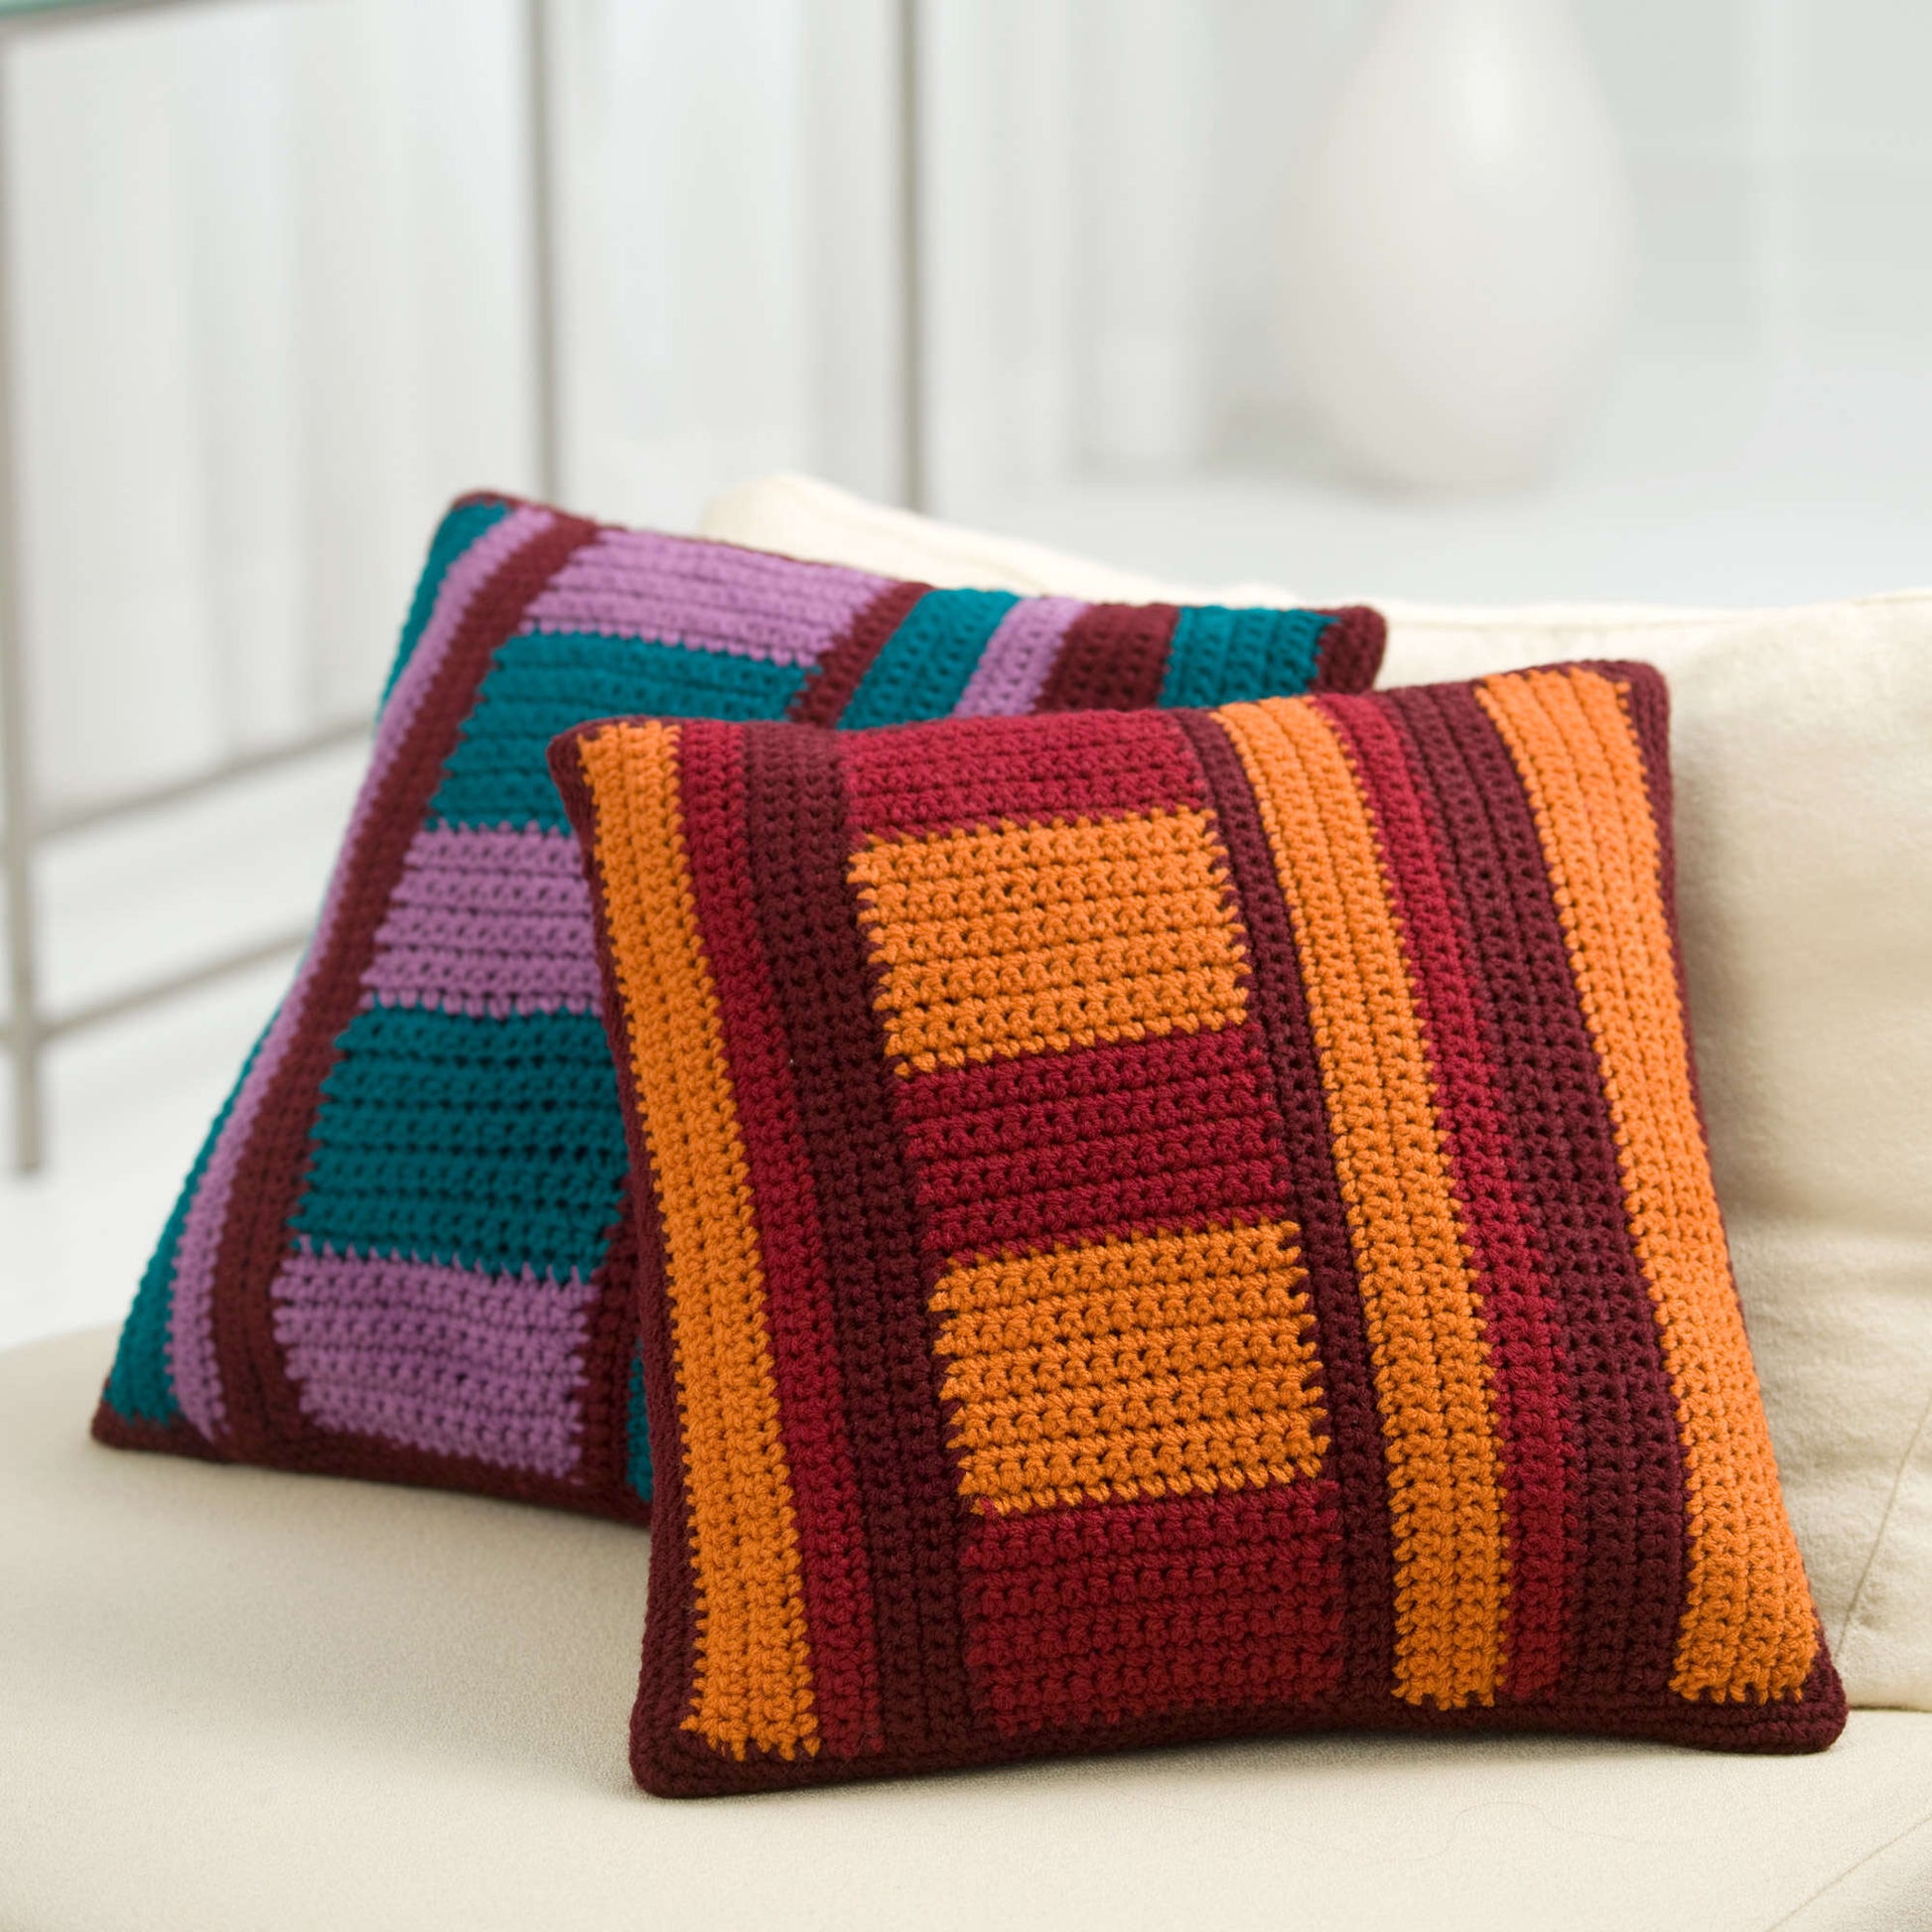 Free Red Heart Mod Striped Pillows Crochet Pattern